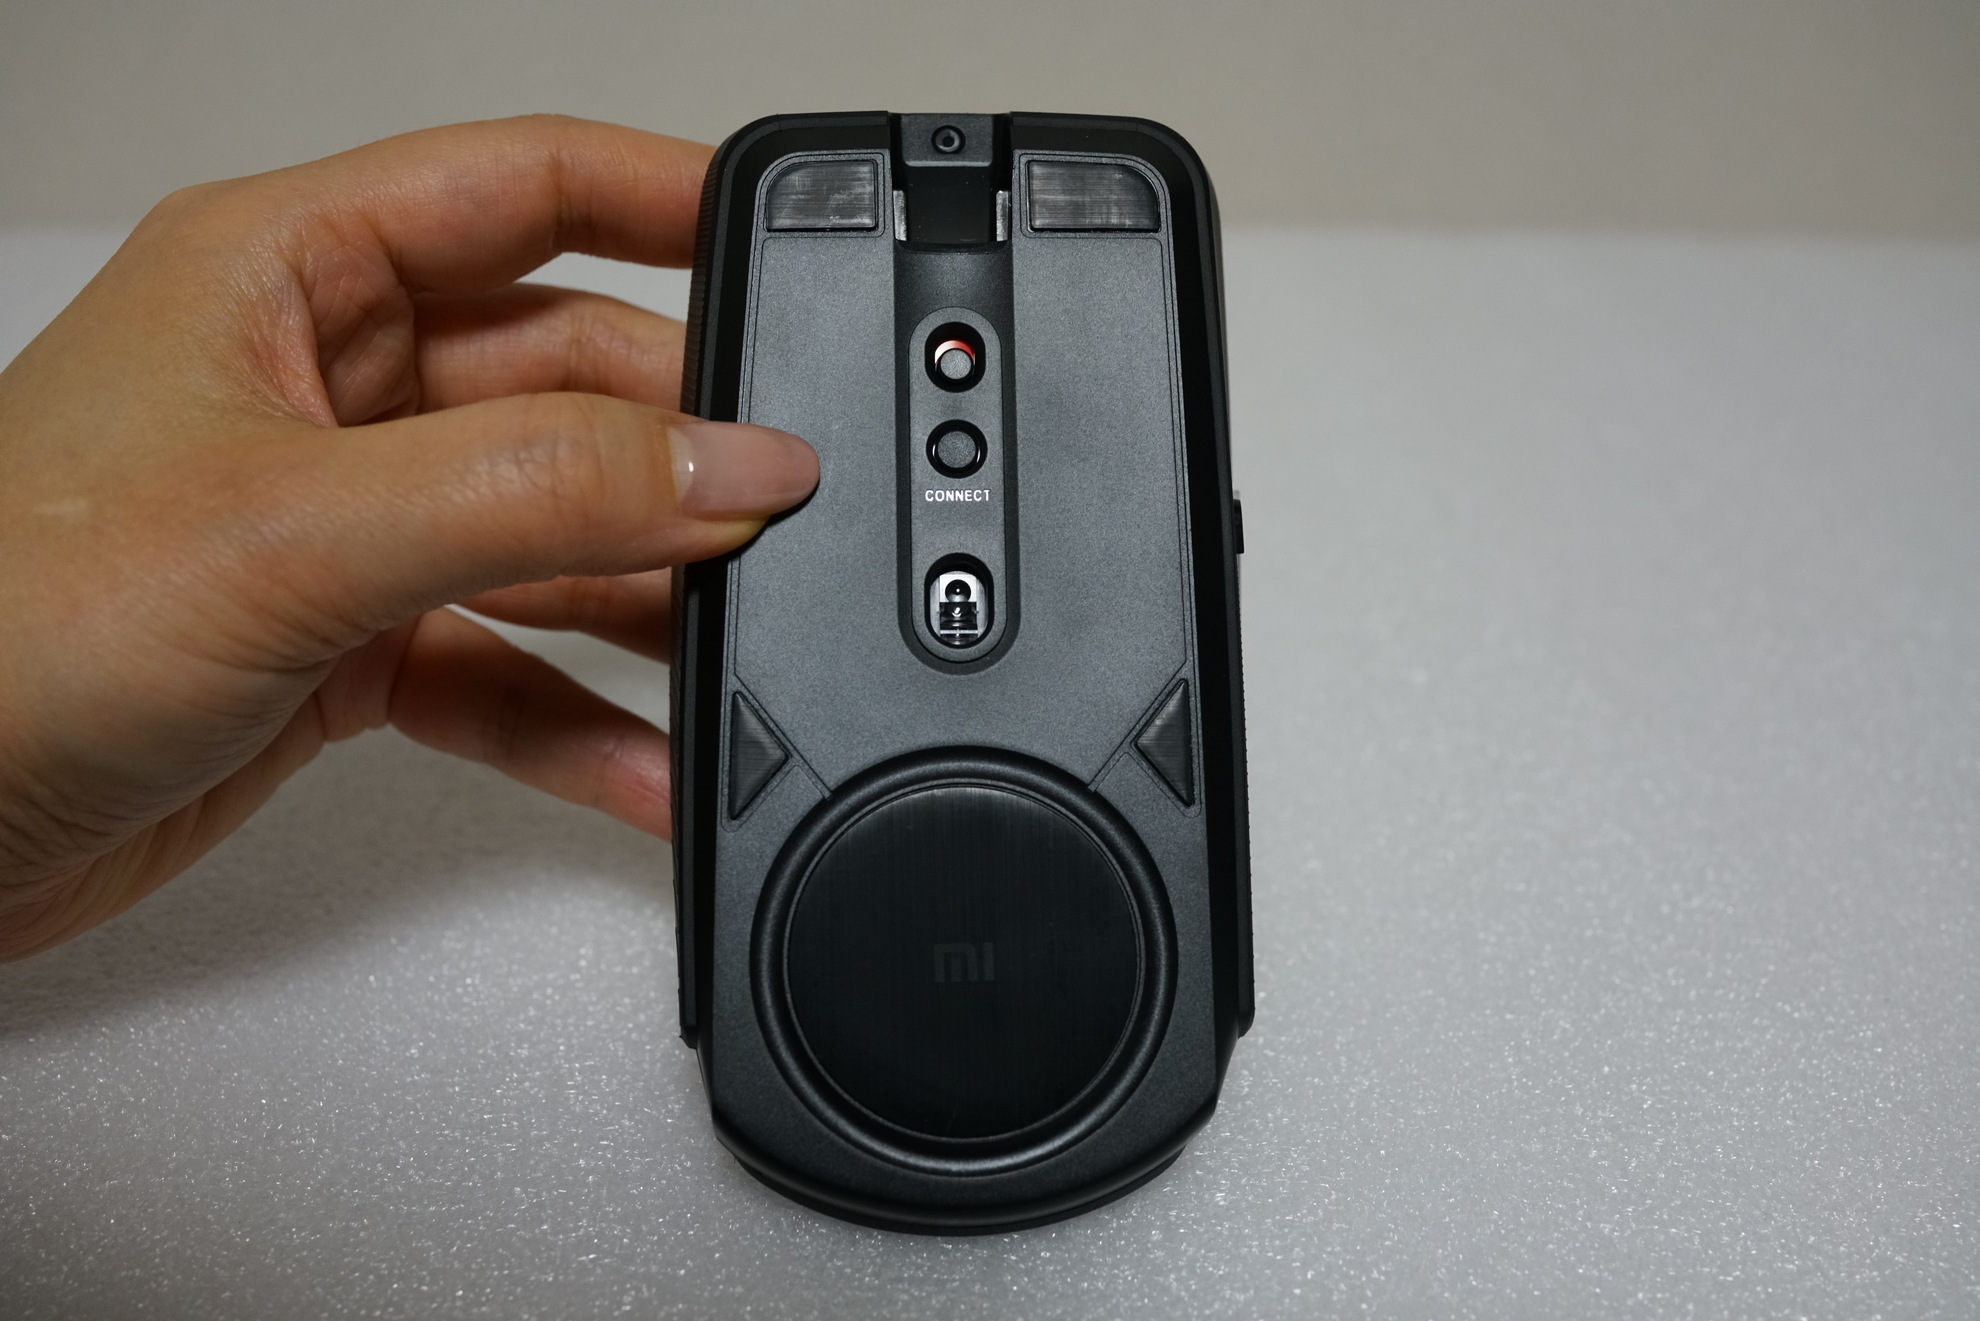 Xiaomi XMYXSB01MW Gaming Mouse レビュー